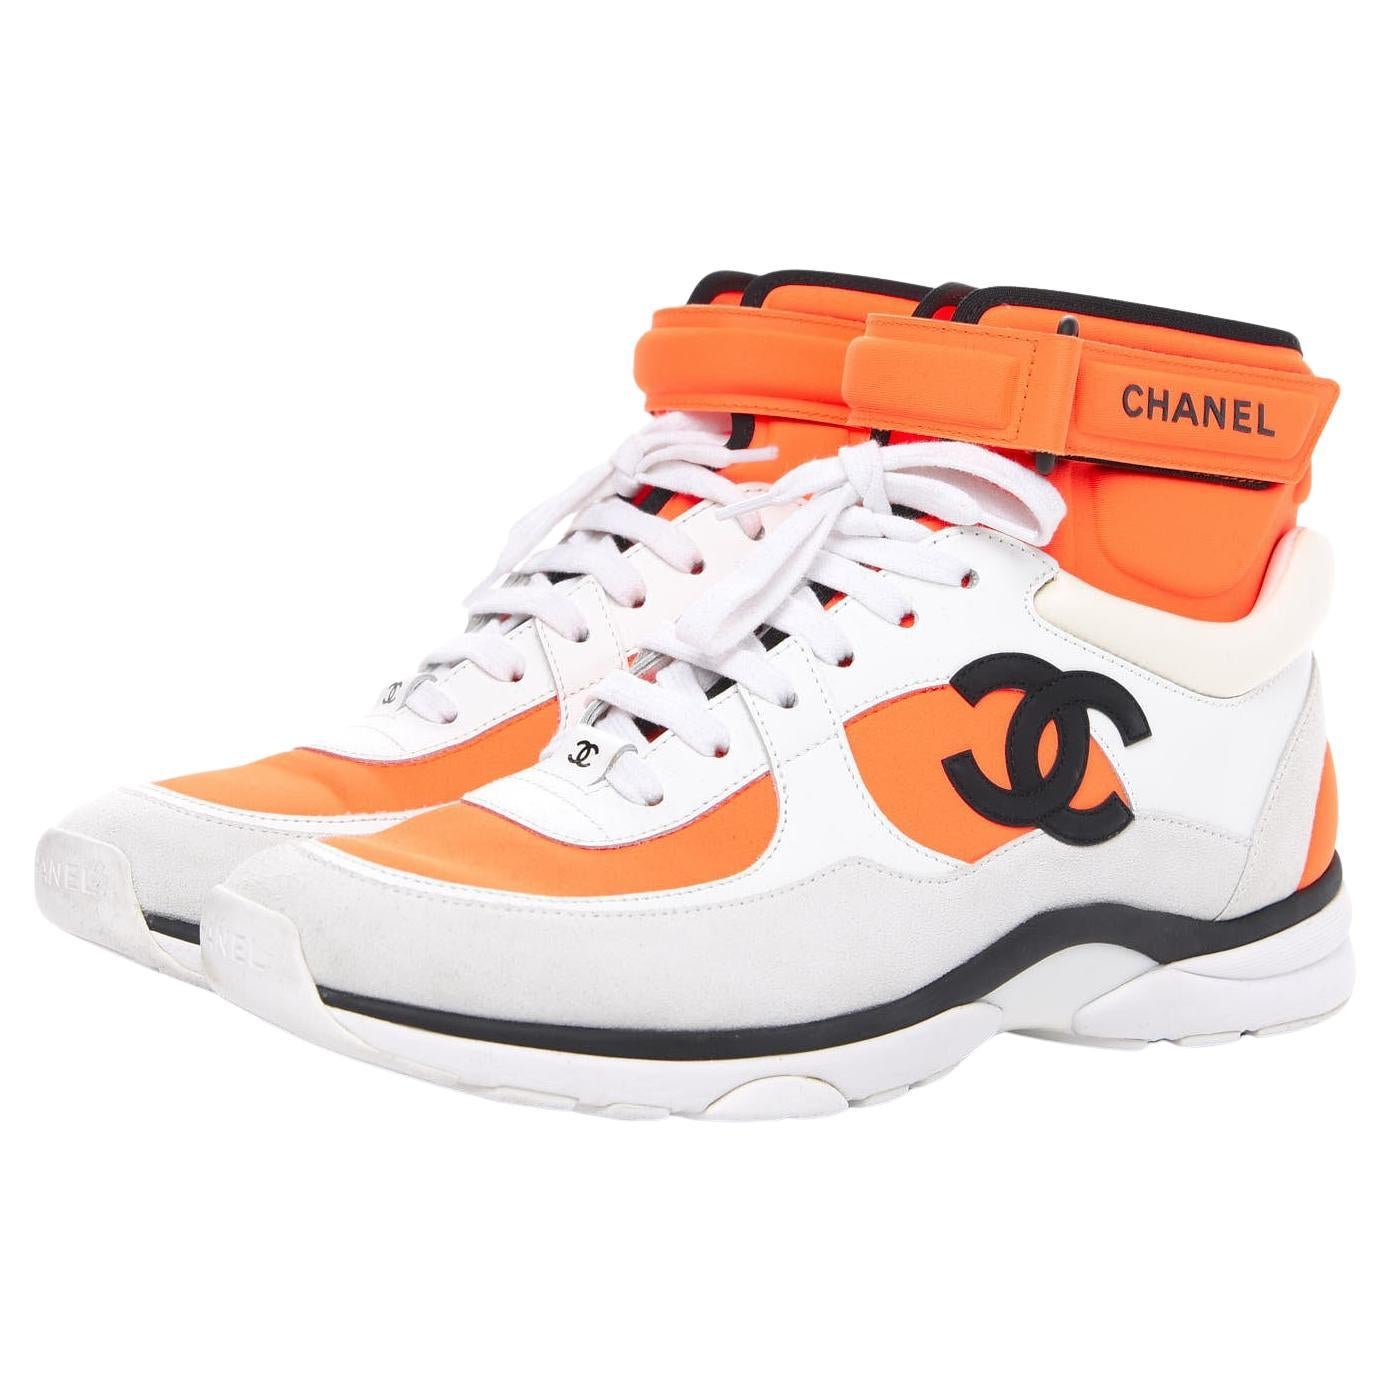 Suede Calfskin Lambskin Neoprene High Top CC Sneakers 40 White Fluo Orange For Sale